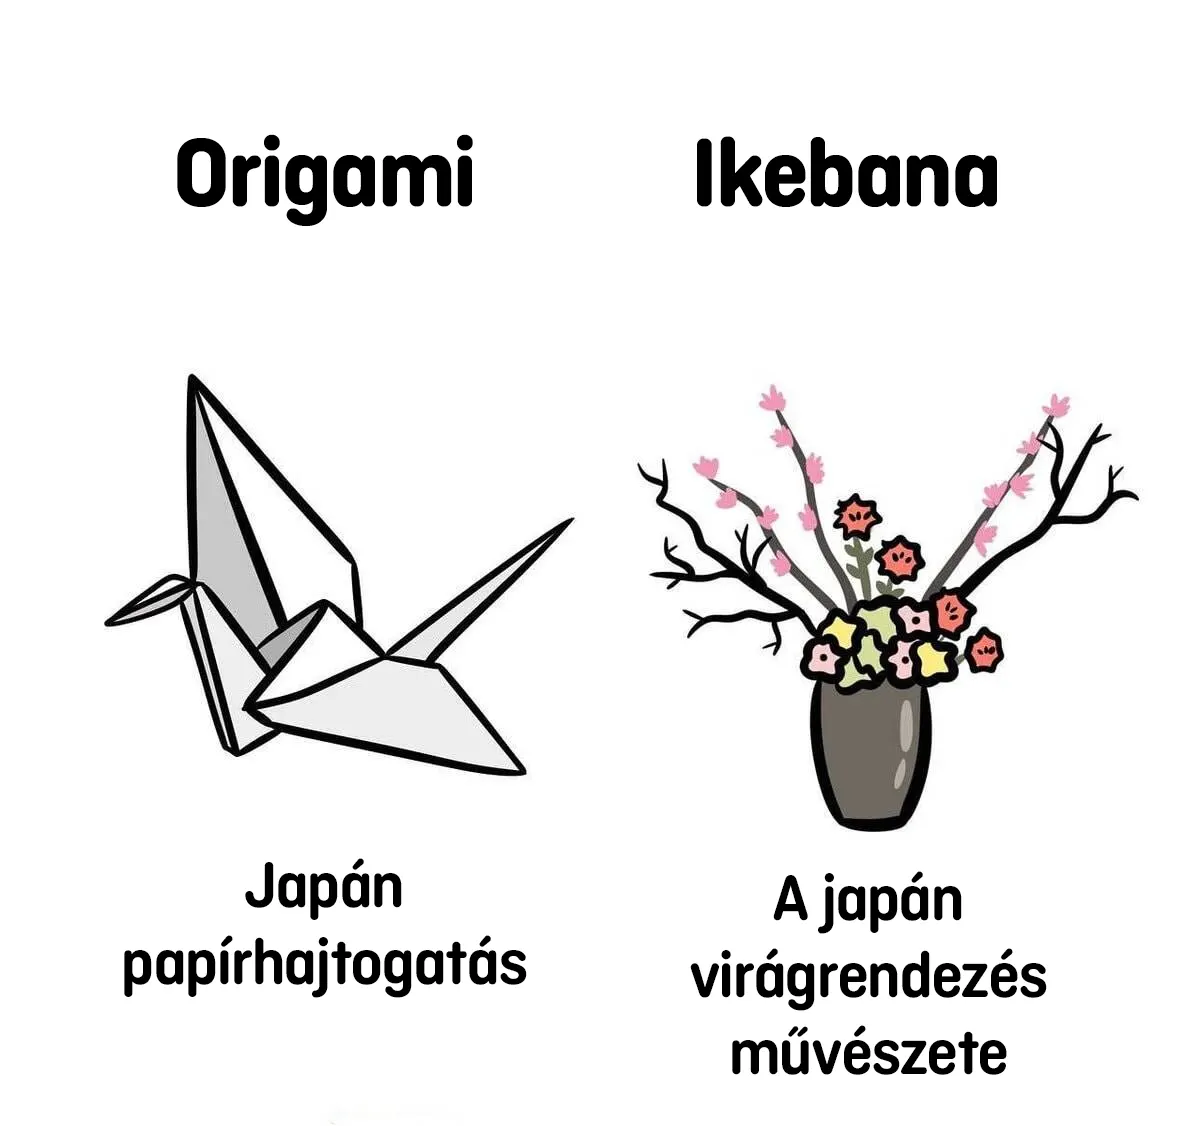 Origami vs ikebana